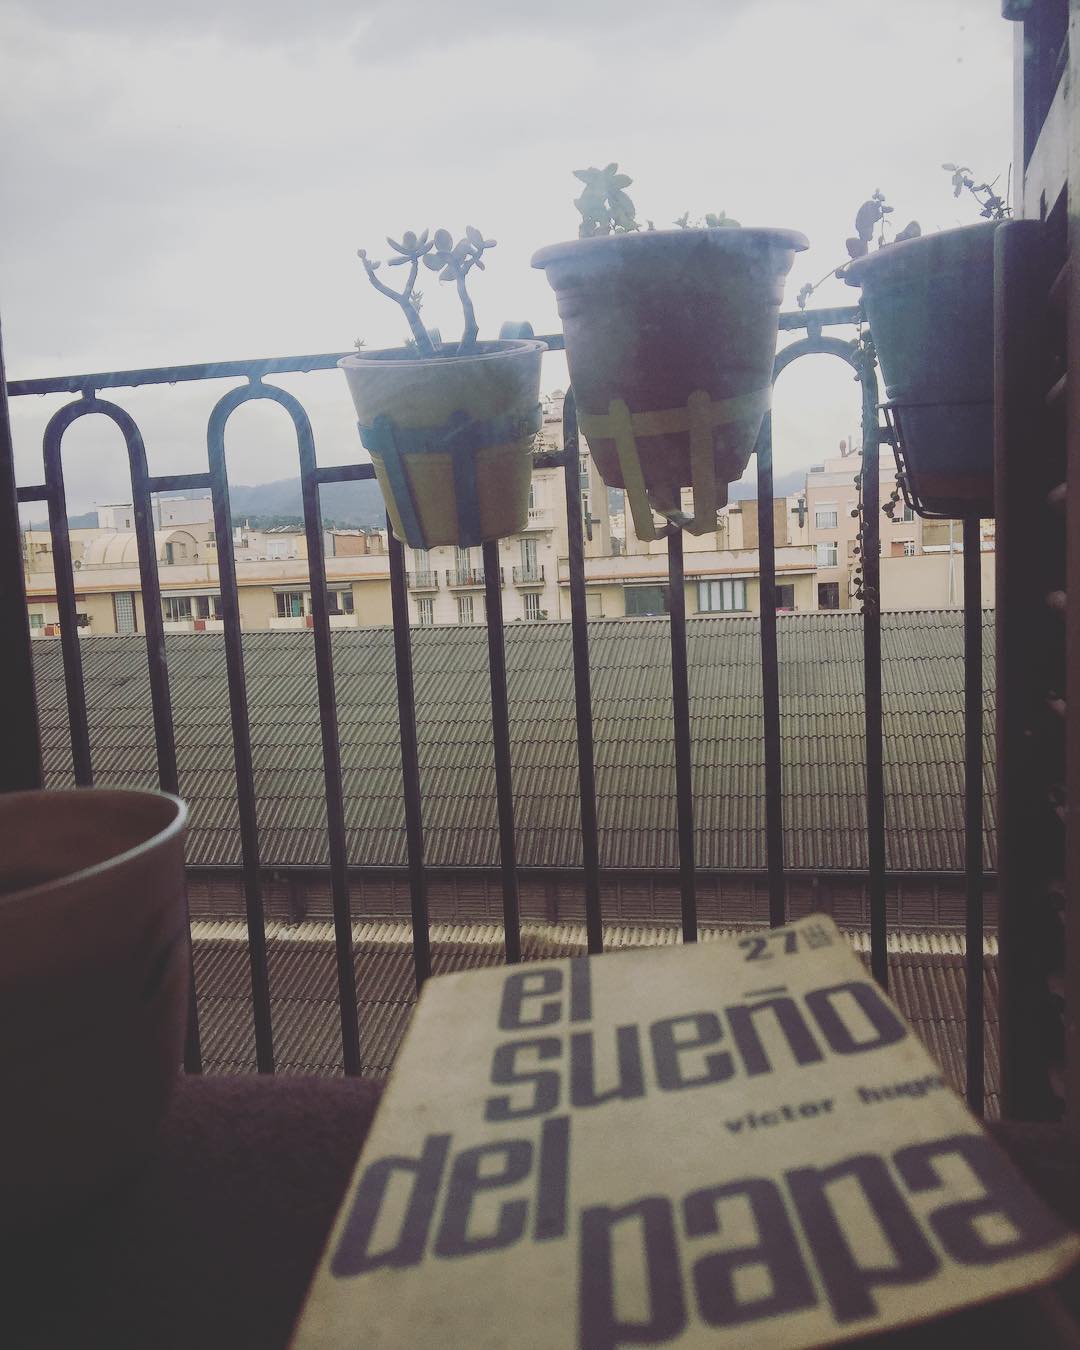 Café, lectura y manta para desayunar como si fuera otoño :)) #amillsmorning #bondia #buenosdias #goodmorning #morning #day #barcelona #barridegracia #daytime #sunrise #morn #awake #wakeup #wake #wakingup #ready #sleepy #sluggish #snooze #instagood #earlybird #algaida #photooftheday #gettingready #goingout #sunshine #instamorning #early